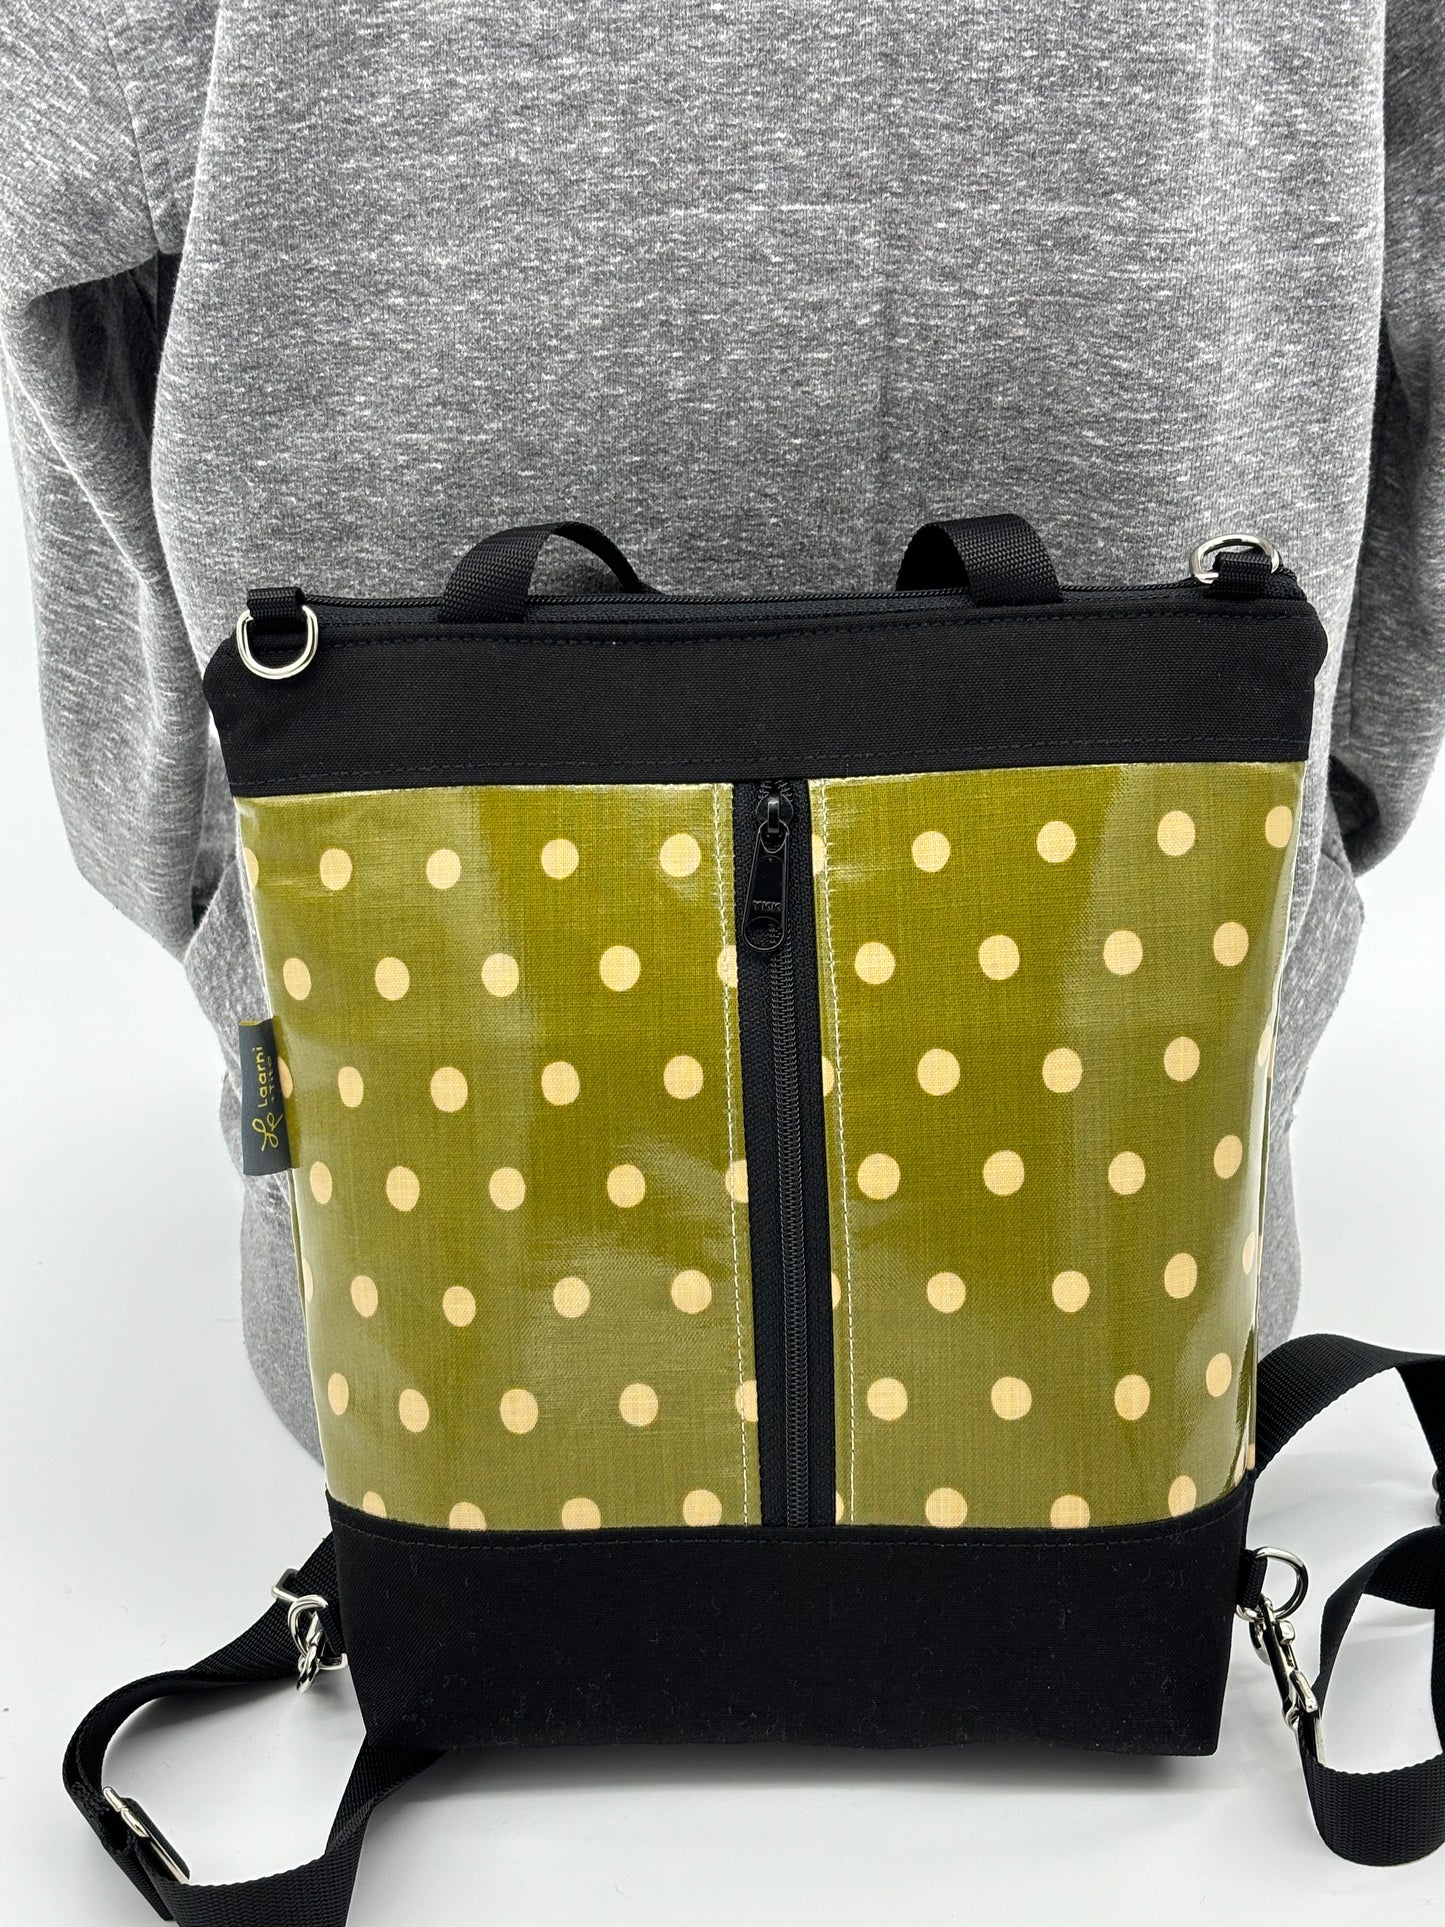 Backpack/Crossbody in Mossy Green Polka Dots